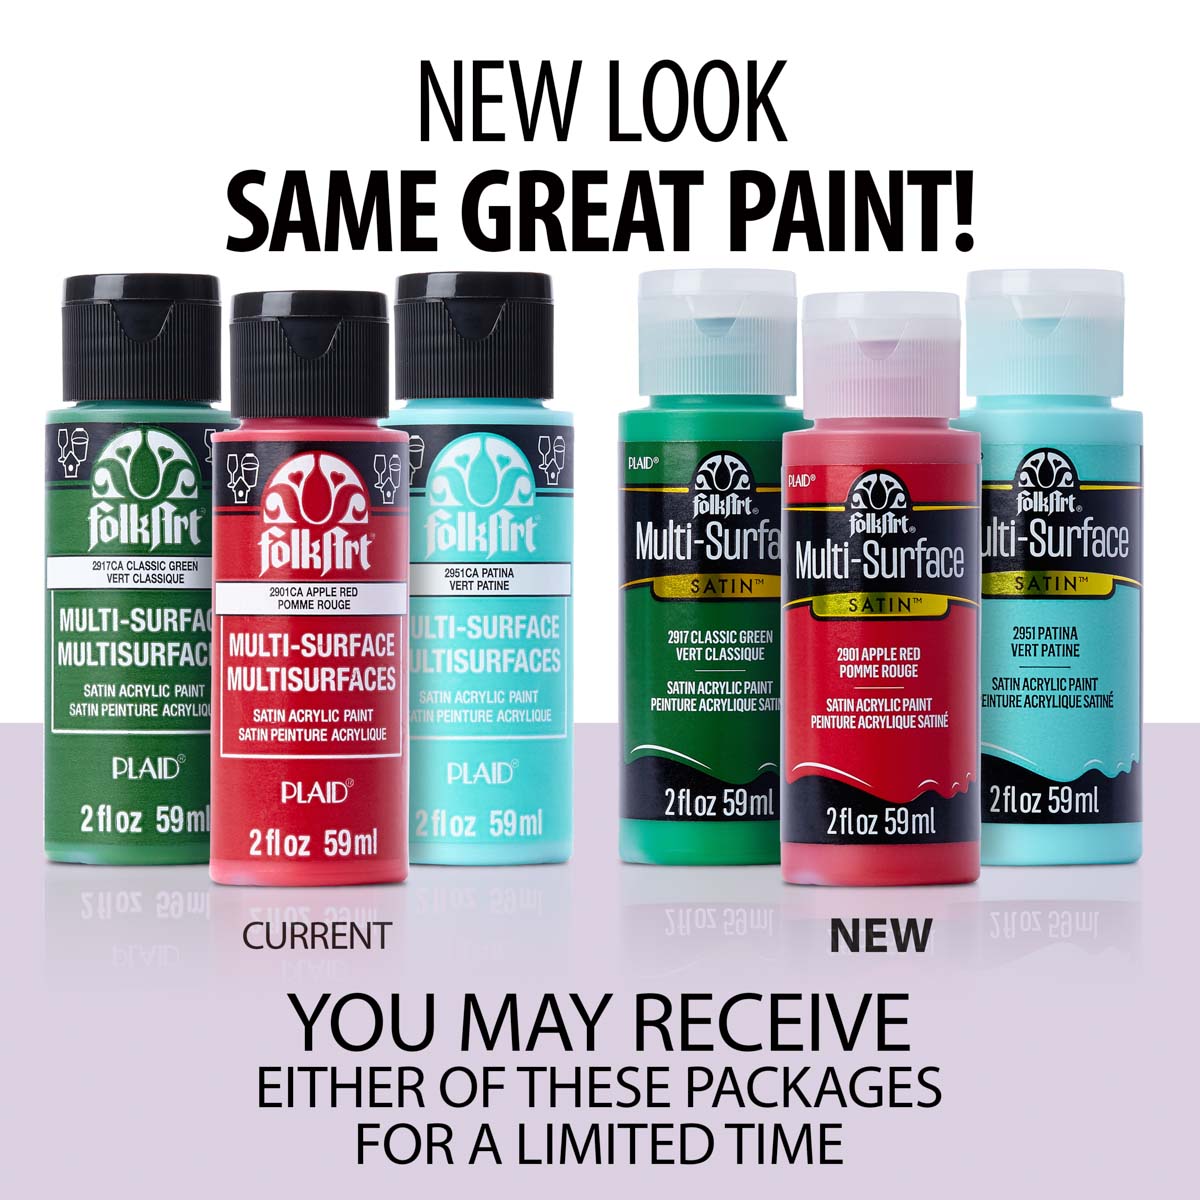 FolkArt ® Multi-Surface Satin Acrylic Paints - Cobalt Hue, 2 oz. - 2926